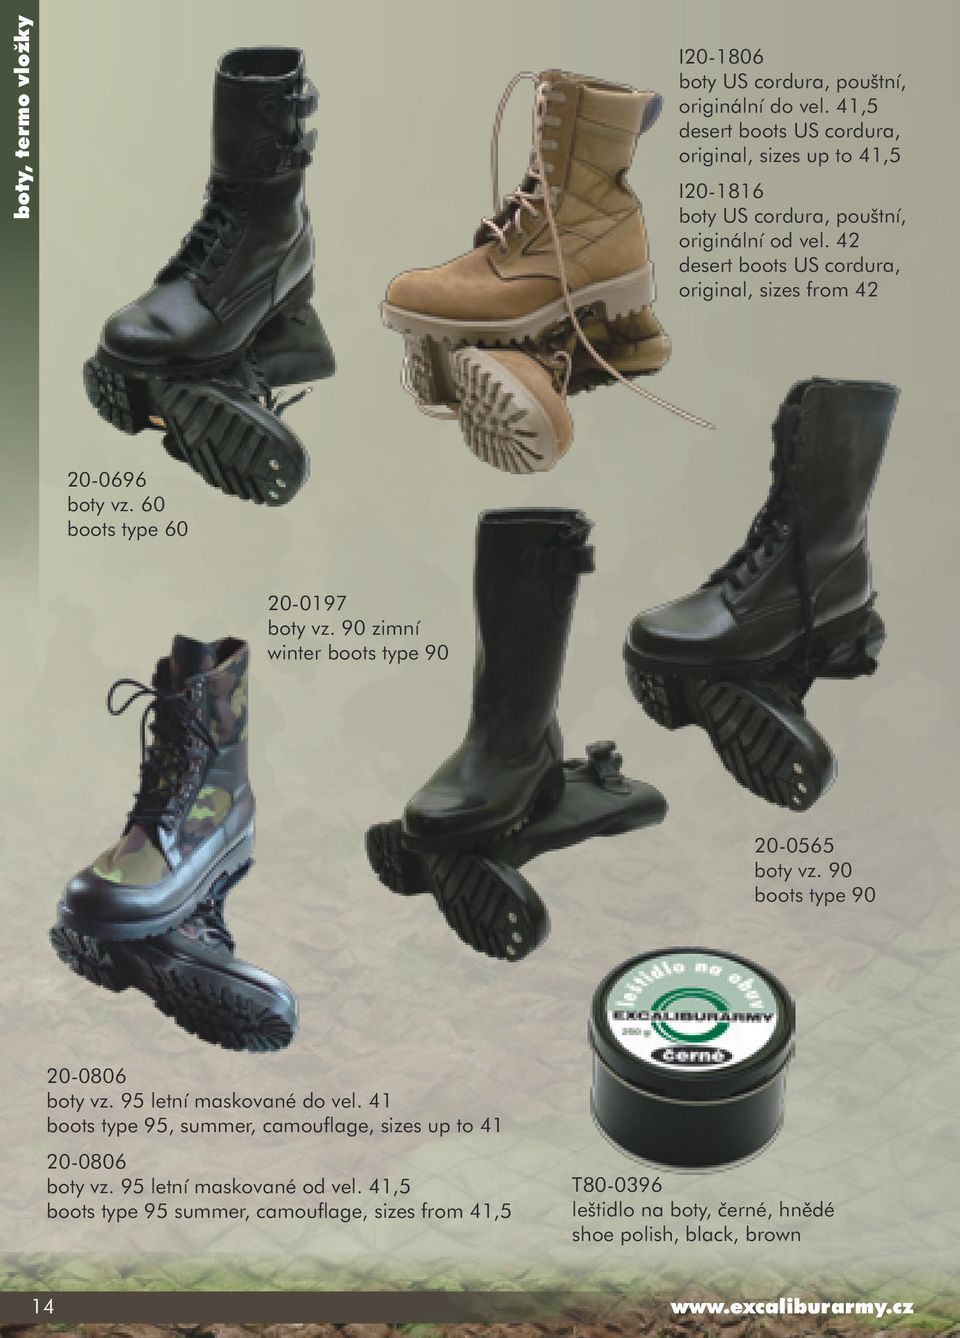 42 desert boots US cordura, original, sizes from 42 20-0696 boty vz. 60 boots type 60 20-0197 boty vz. 90 zimní winter boots type 90 20-0565 boty vz.